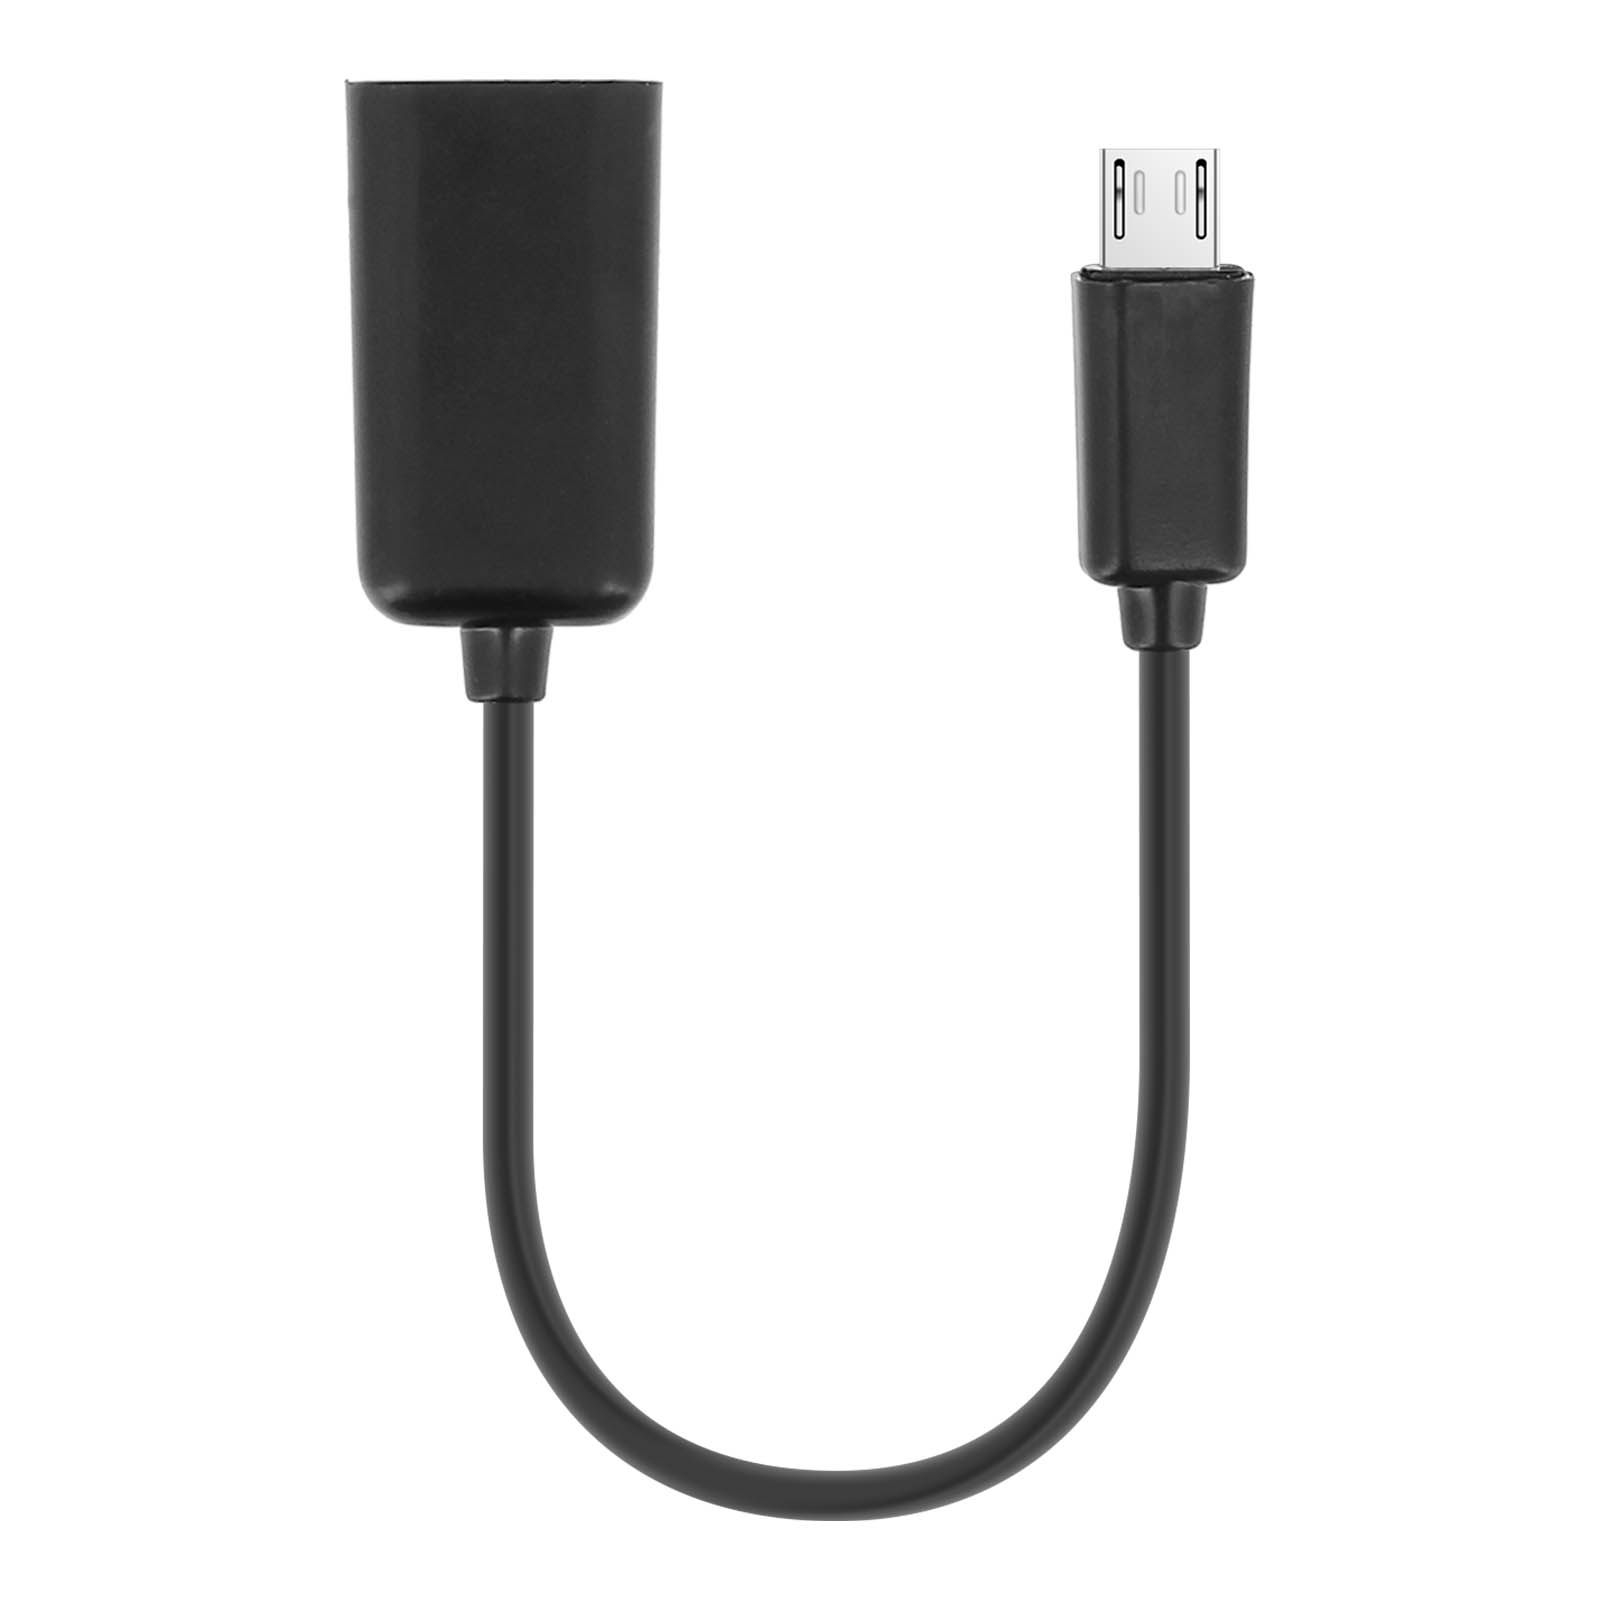 Adaptateur micro-USB vers USB Noir - IDUSD